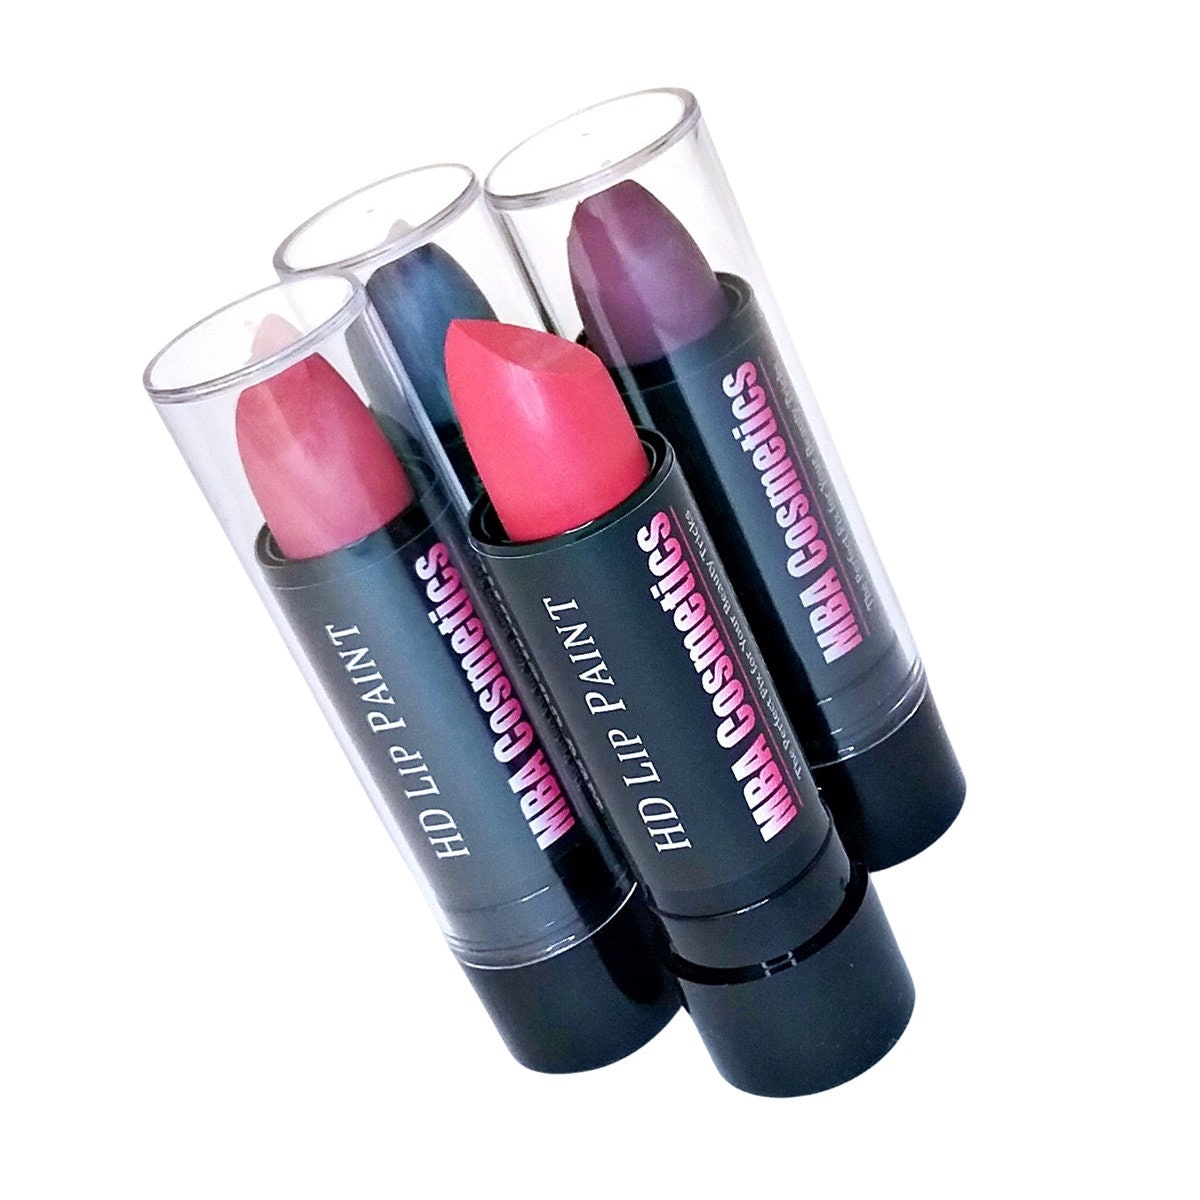 Bare - Pink Nude Color Rich Lipstick